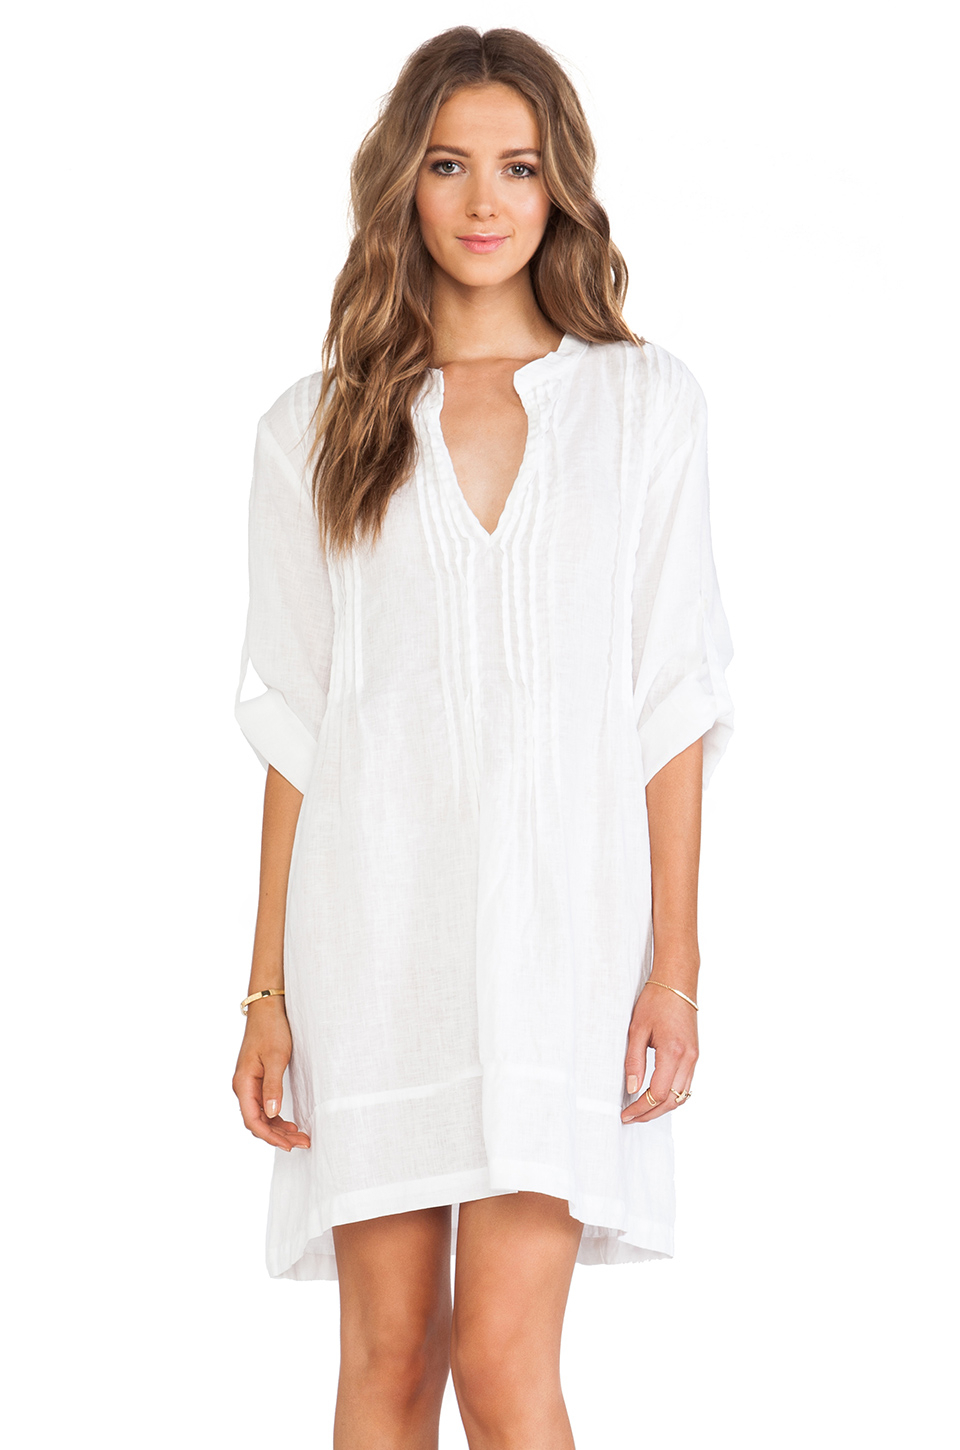 Lyst - Cp shades Regina Tunic Dress in White